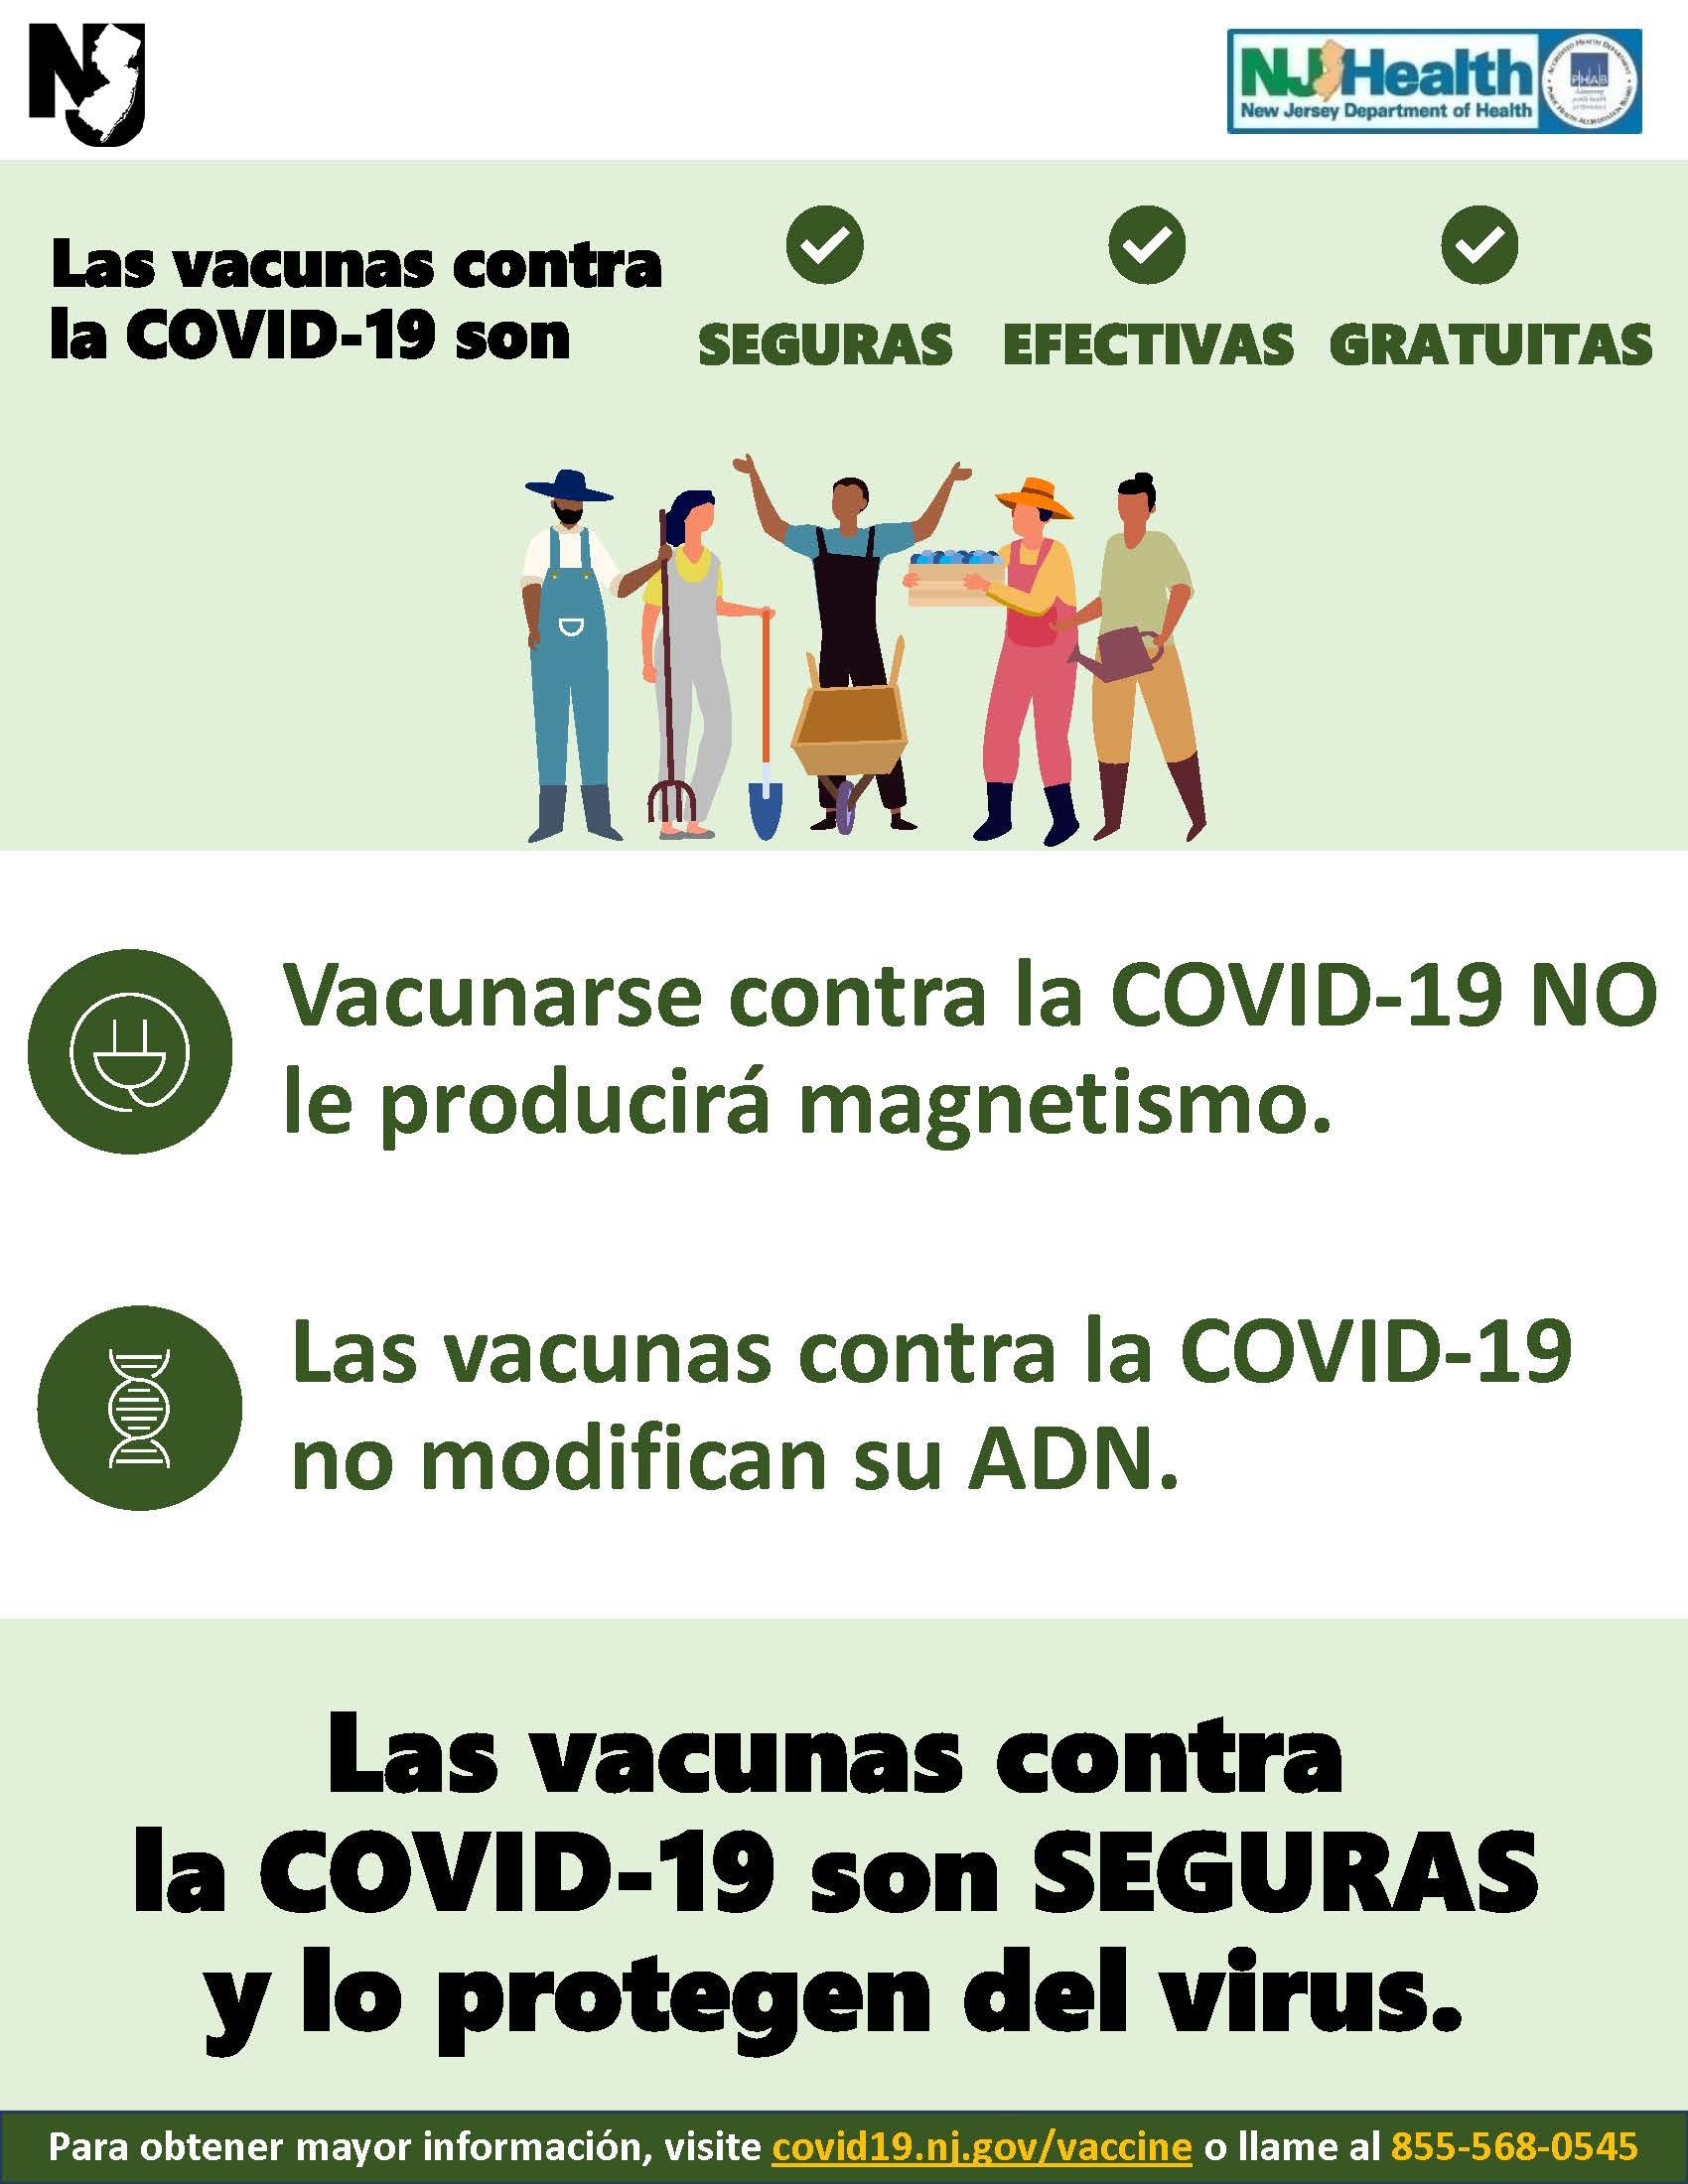 COVID-19 Vaccine DNA Myth flyer (Spanish)